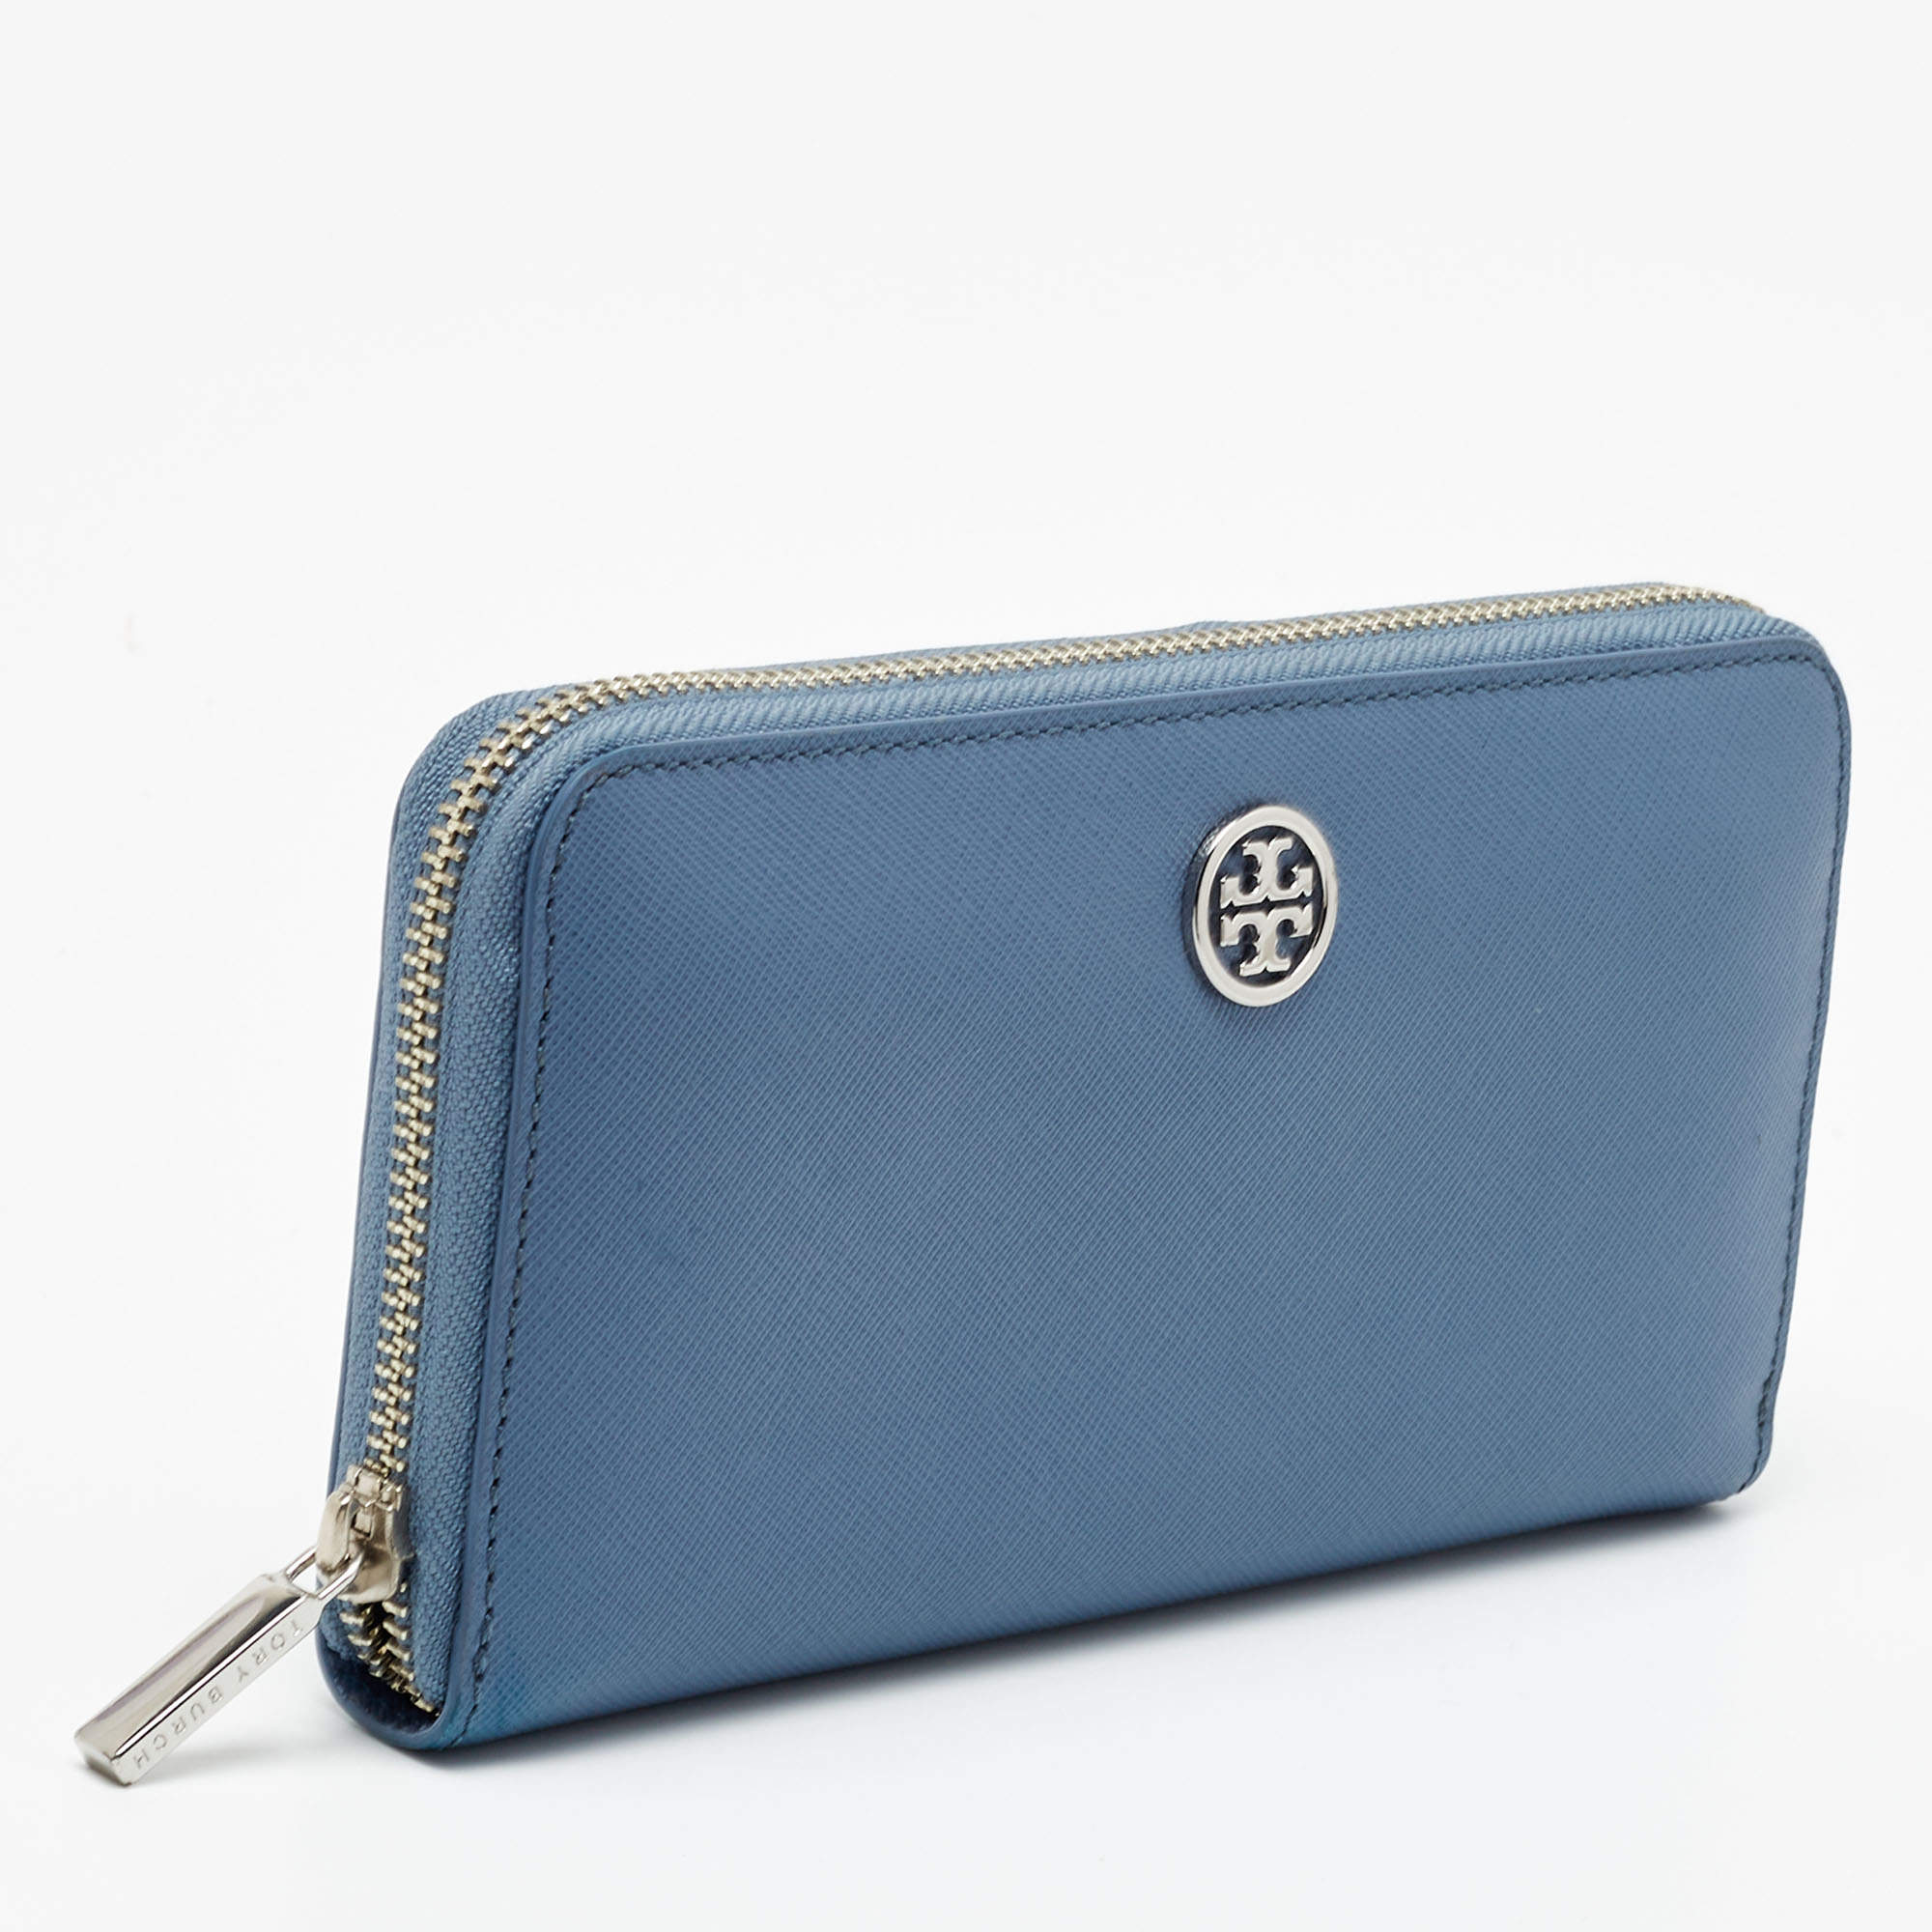 Tory Burch Kipp Small Blue Nile Perforated Logo Leather Crossbody Bag | eBay